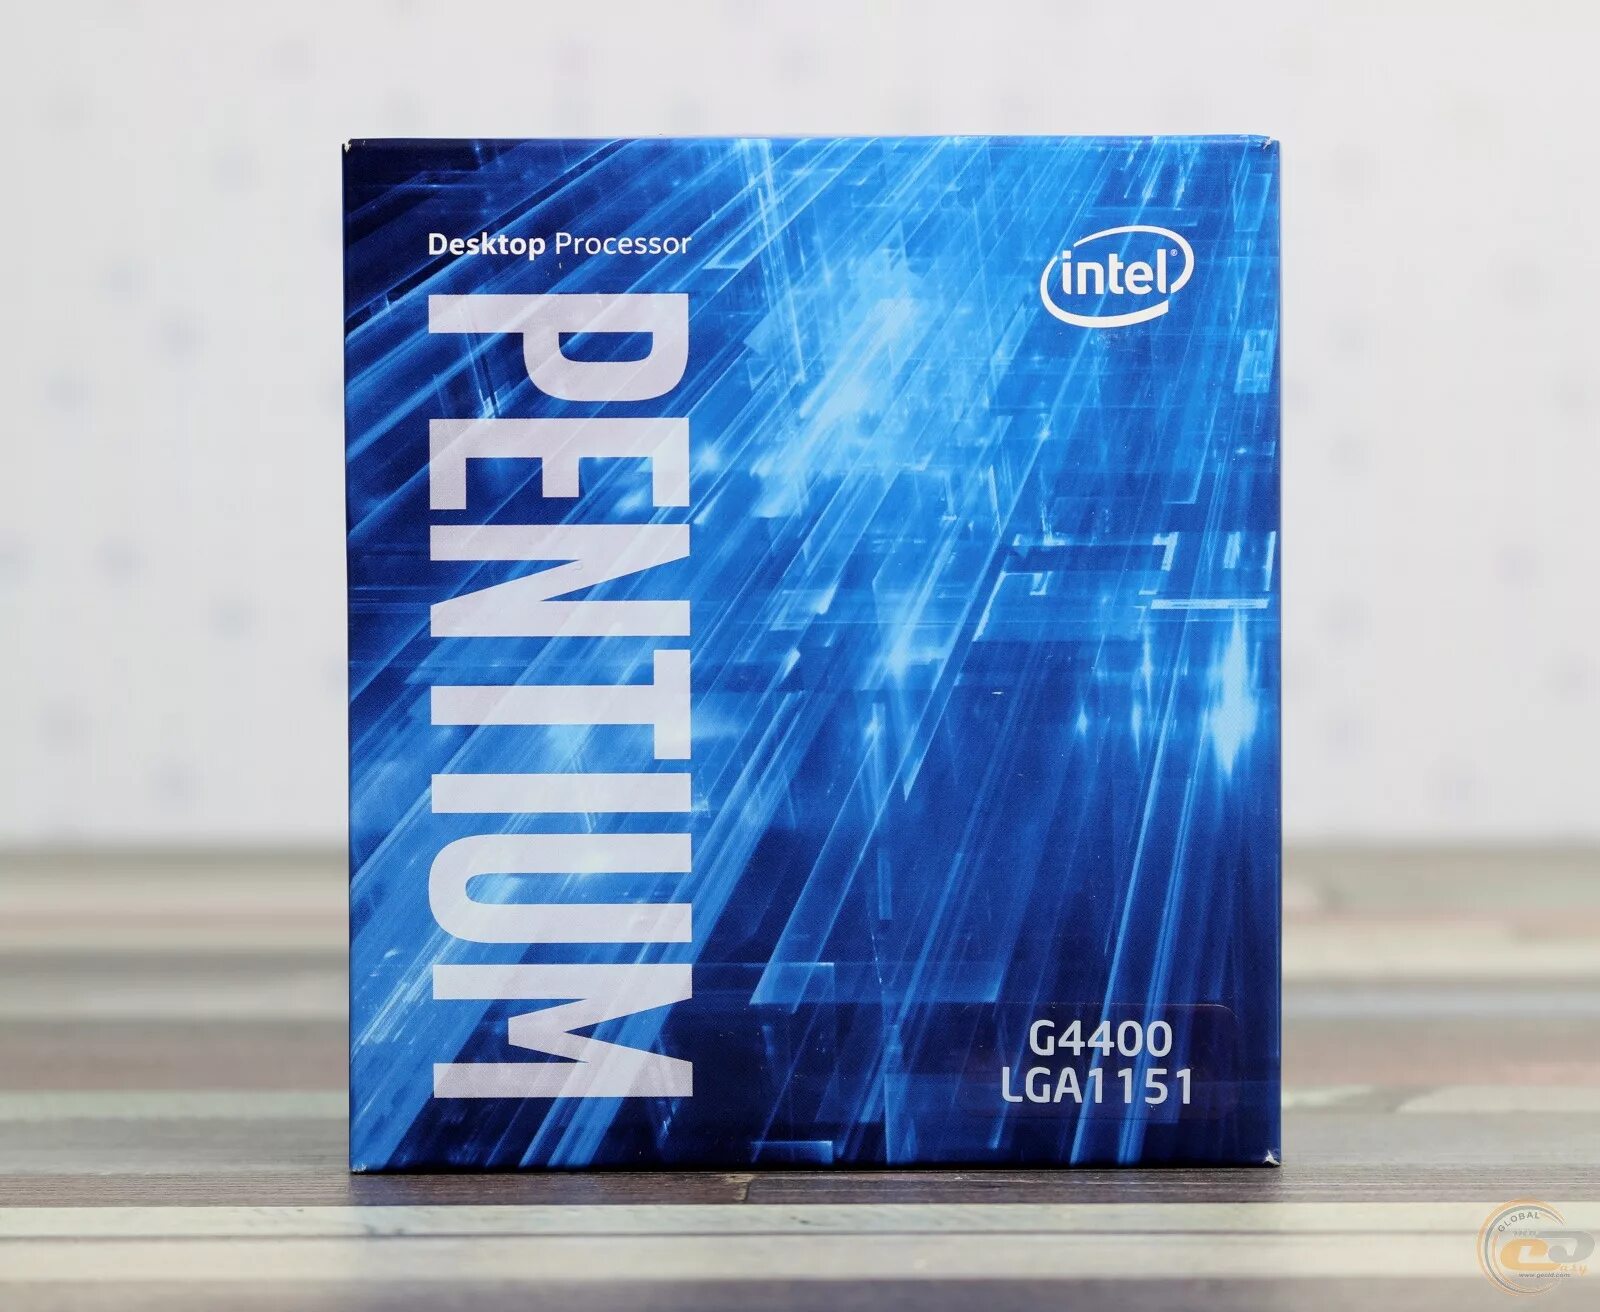 4400 3. Процессор Intel g4400. Интел пентиум g4400. G4400 процессор. G4400 @ 3.30GHZ.